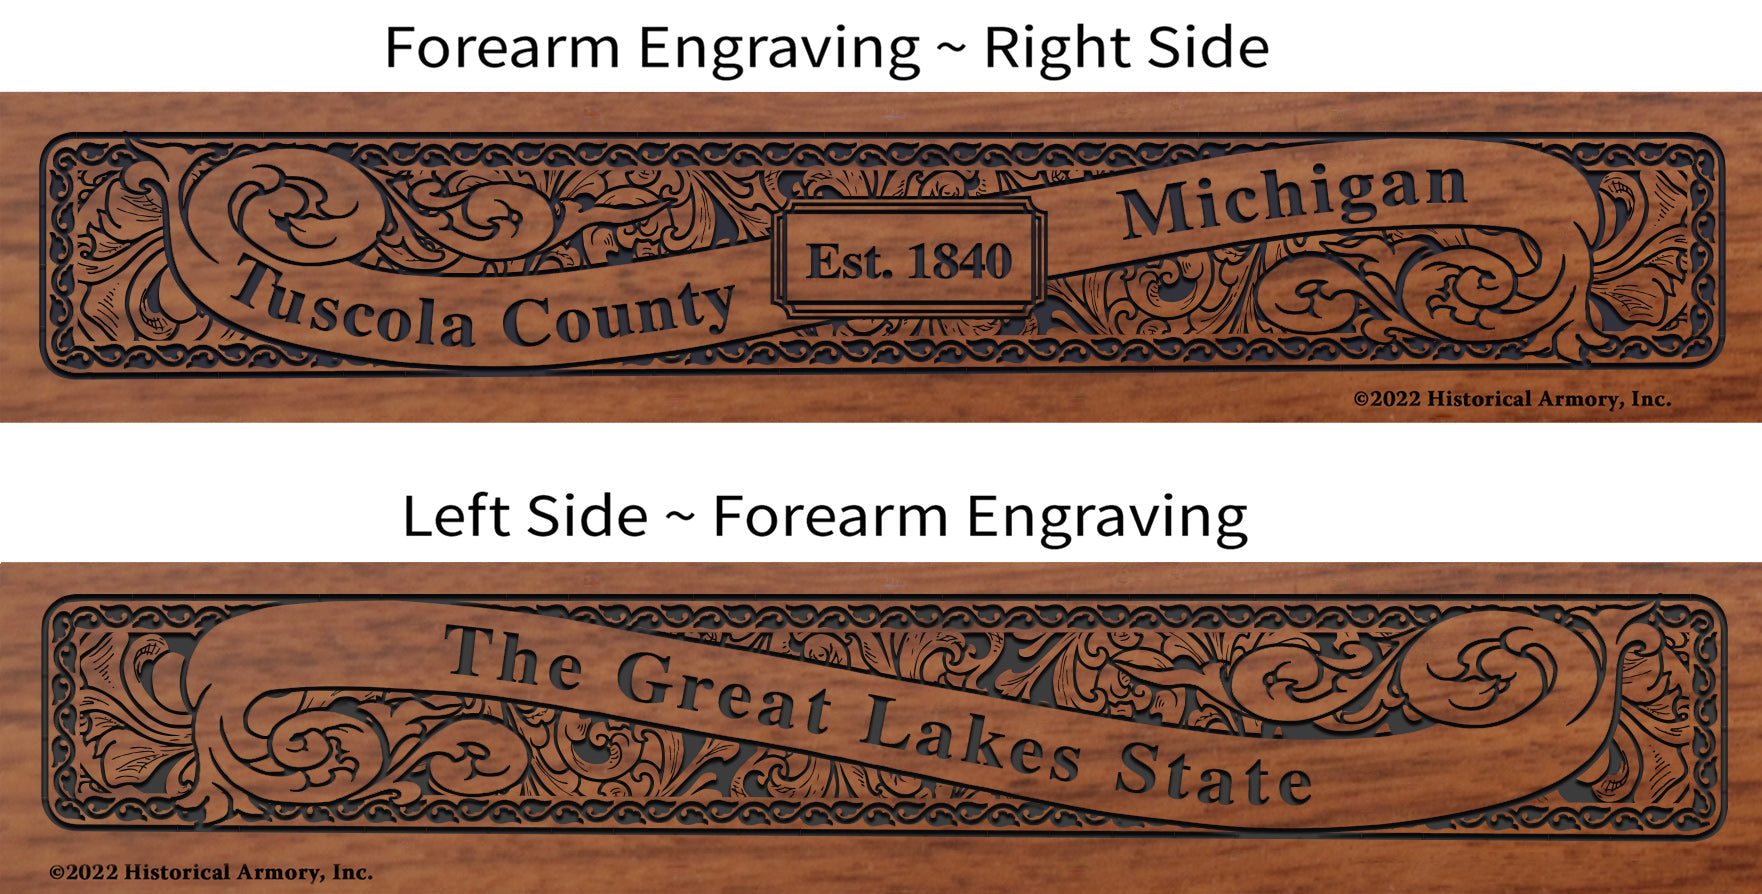 Tuscola County Michigan Engraved Rifle Forearm